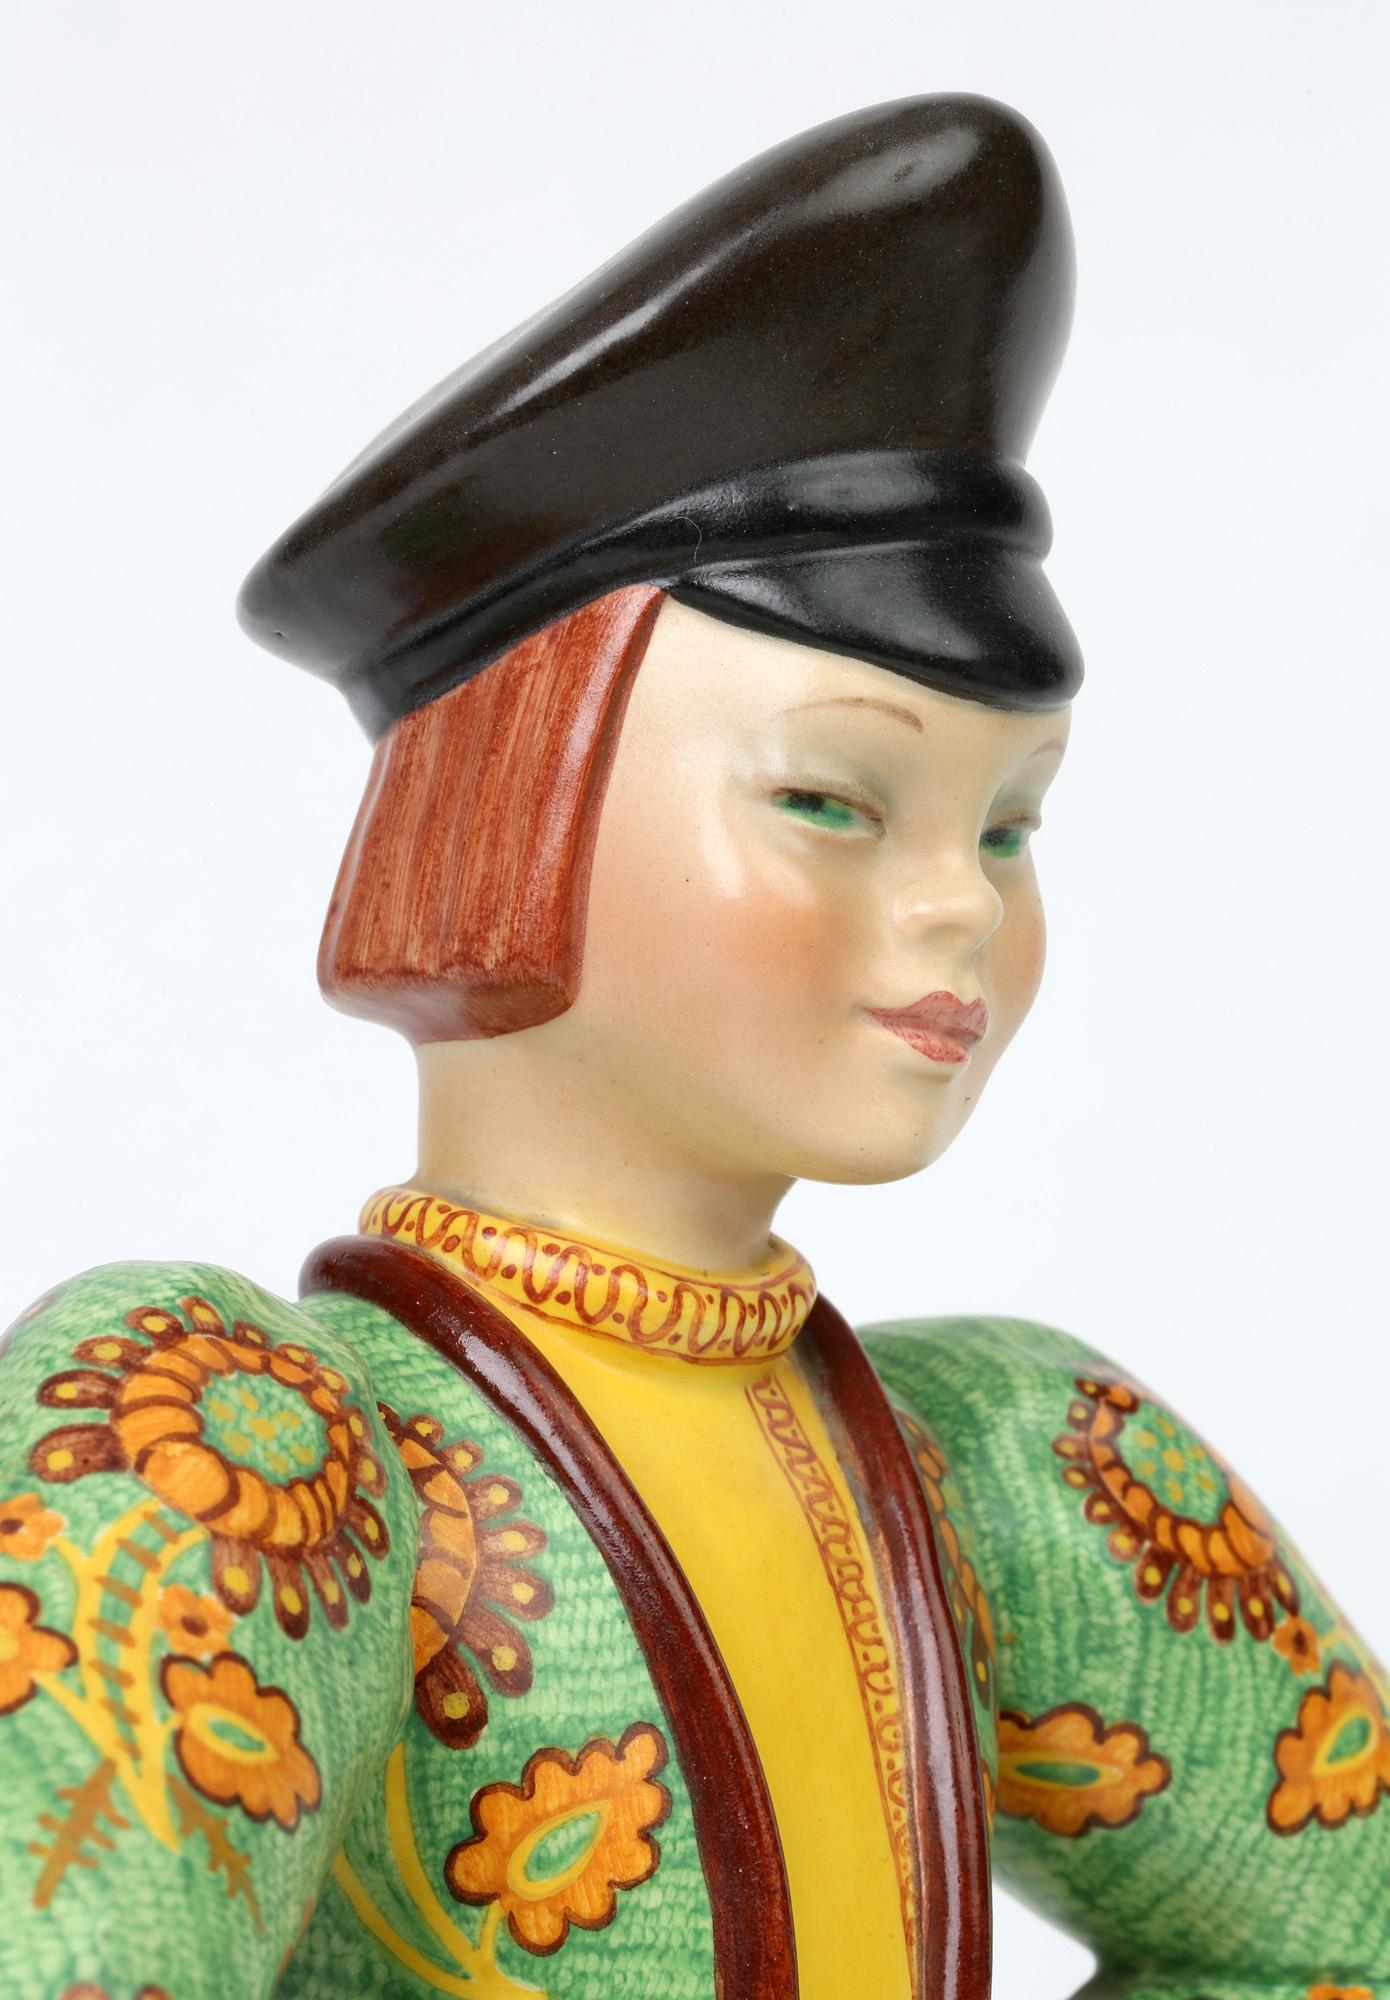 Lenci Art Deco Ivan the Russian Boy Pottery Figure by Elena Scavini For Sale 2